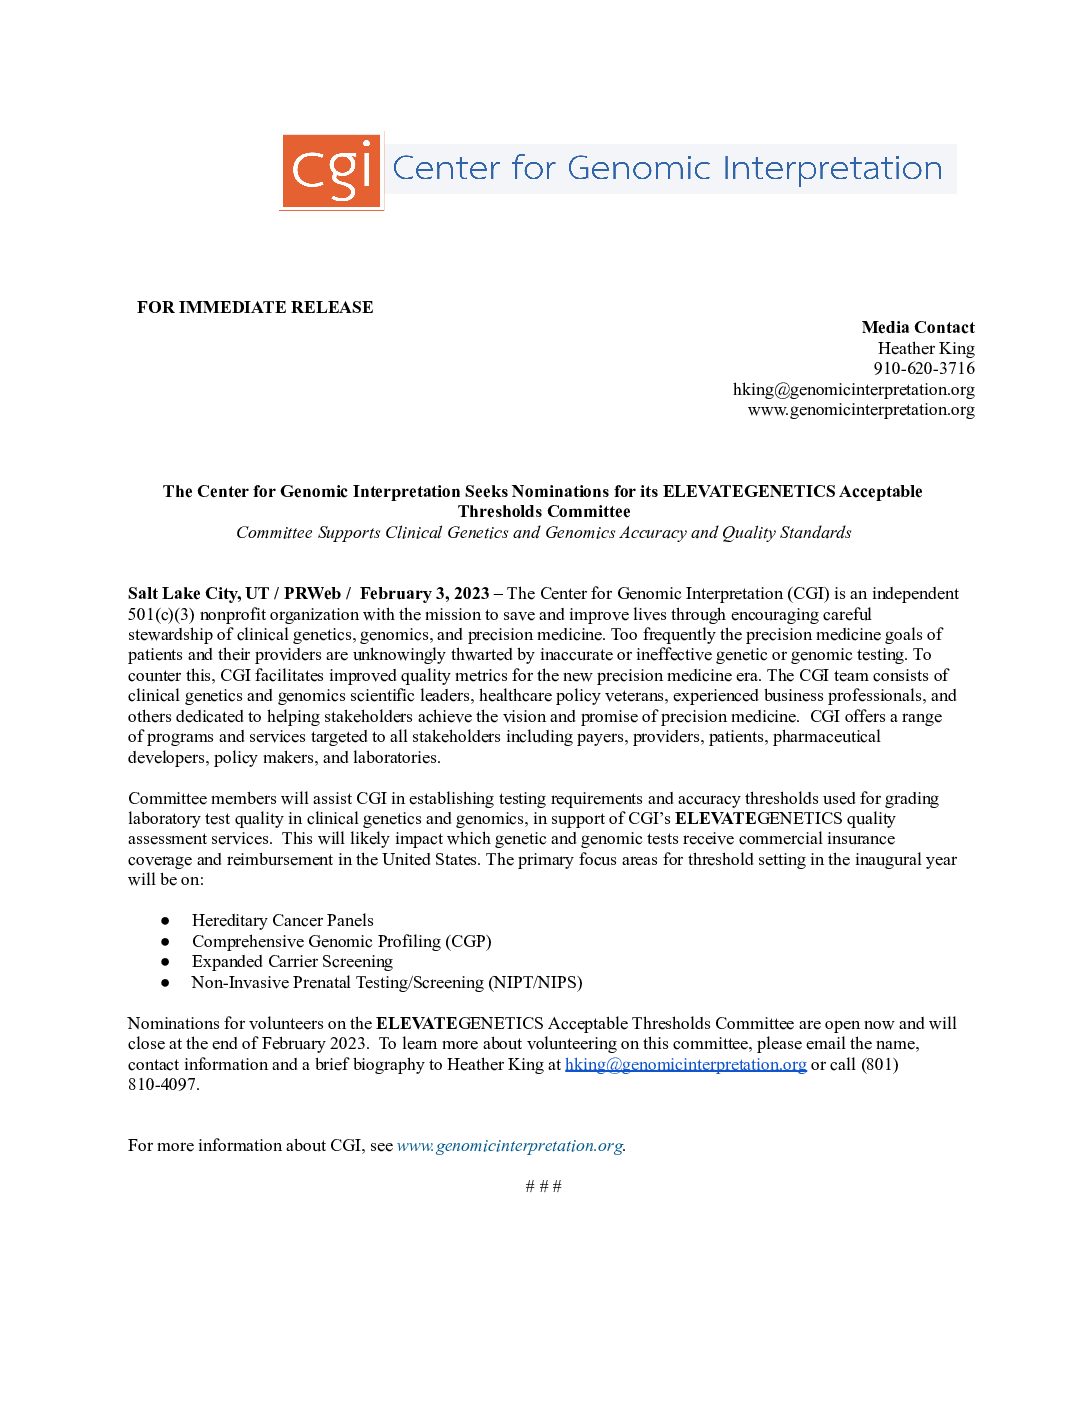 Center For Genomic Interpretation Seeks Nominations of ELEVATEGENETICS Acceptable Thresholds Committee